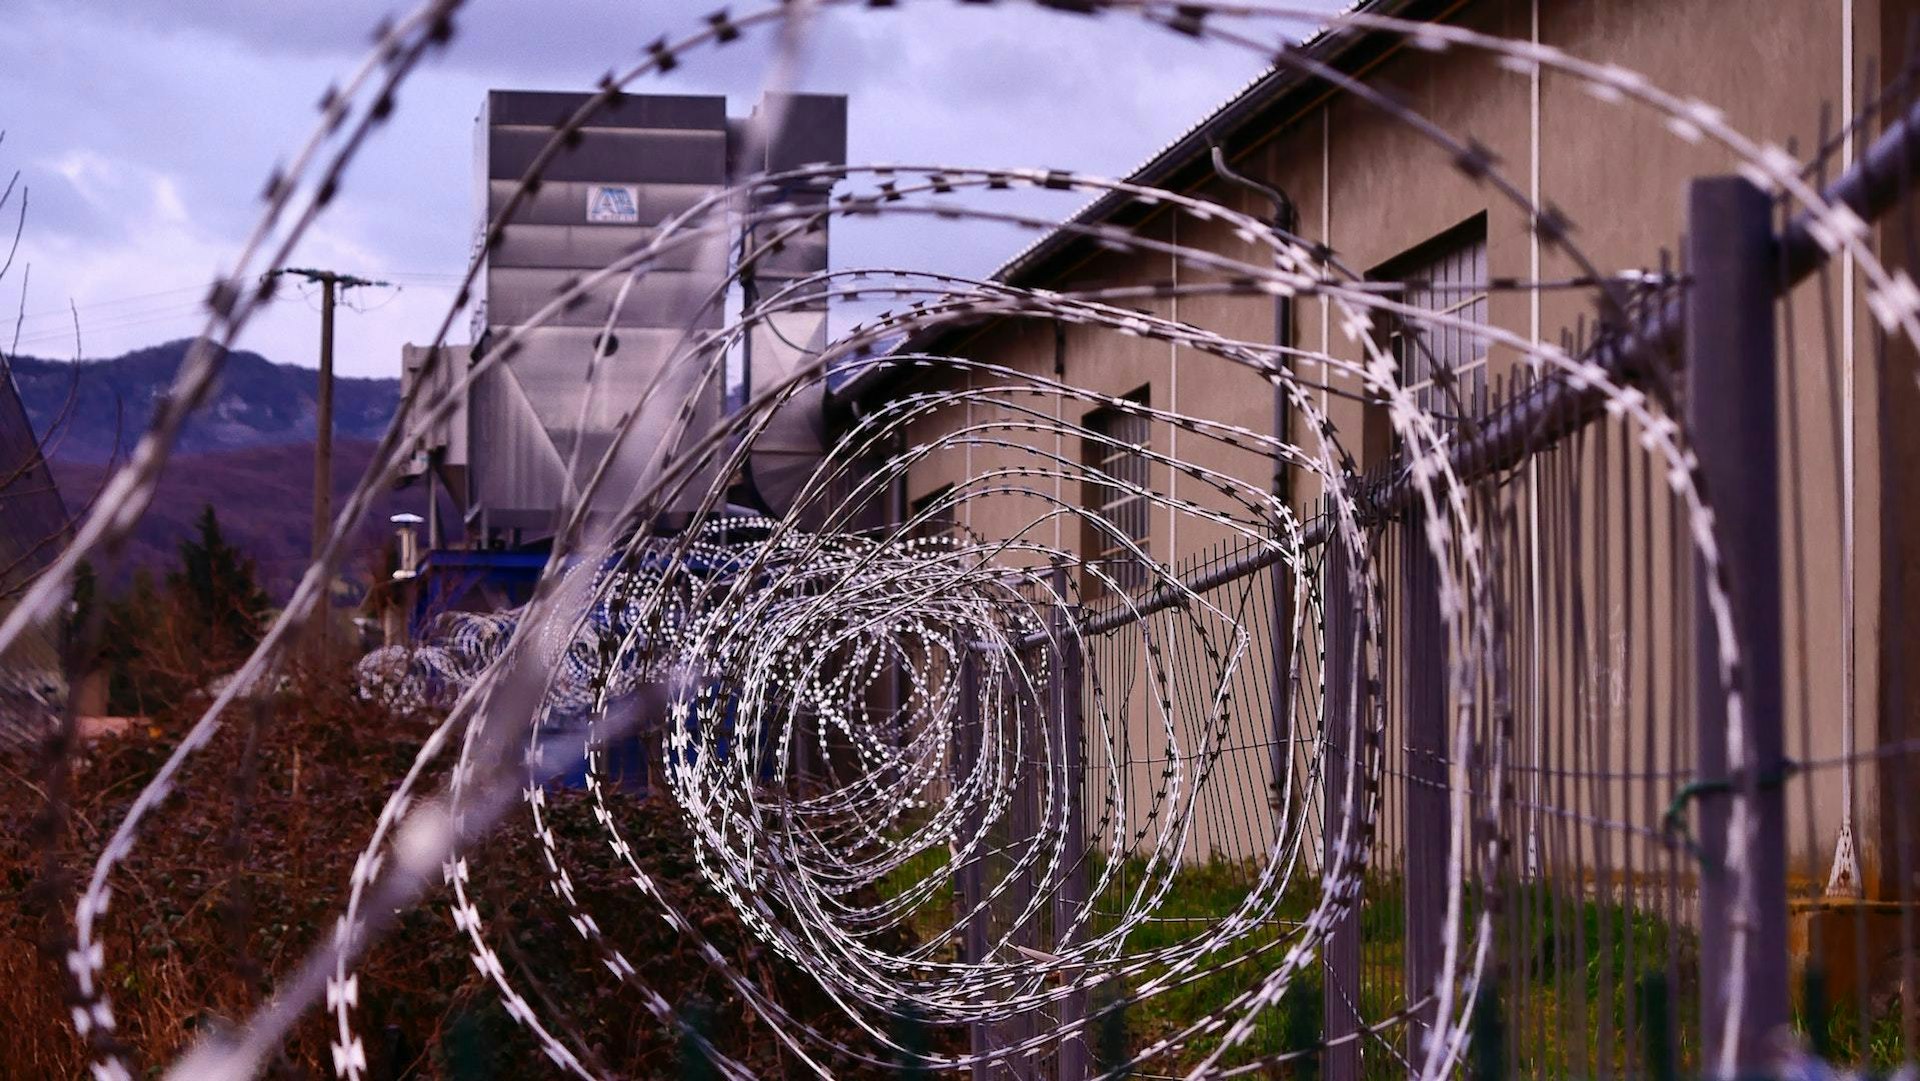 Prisoners on the devastating reality of life in lockdown